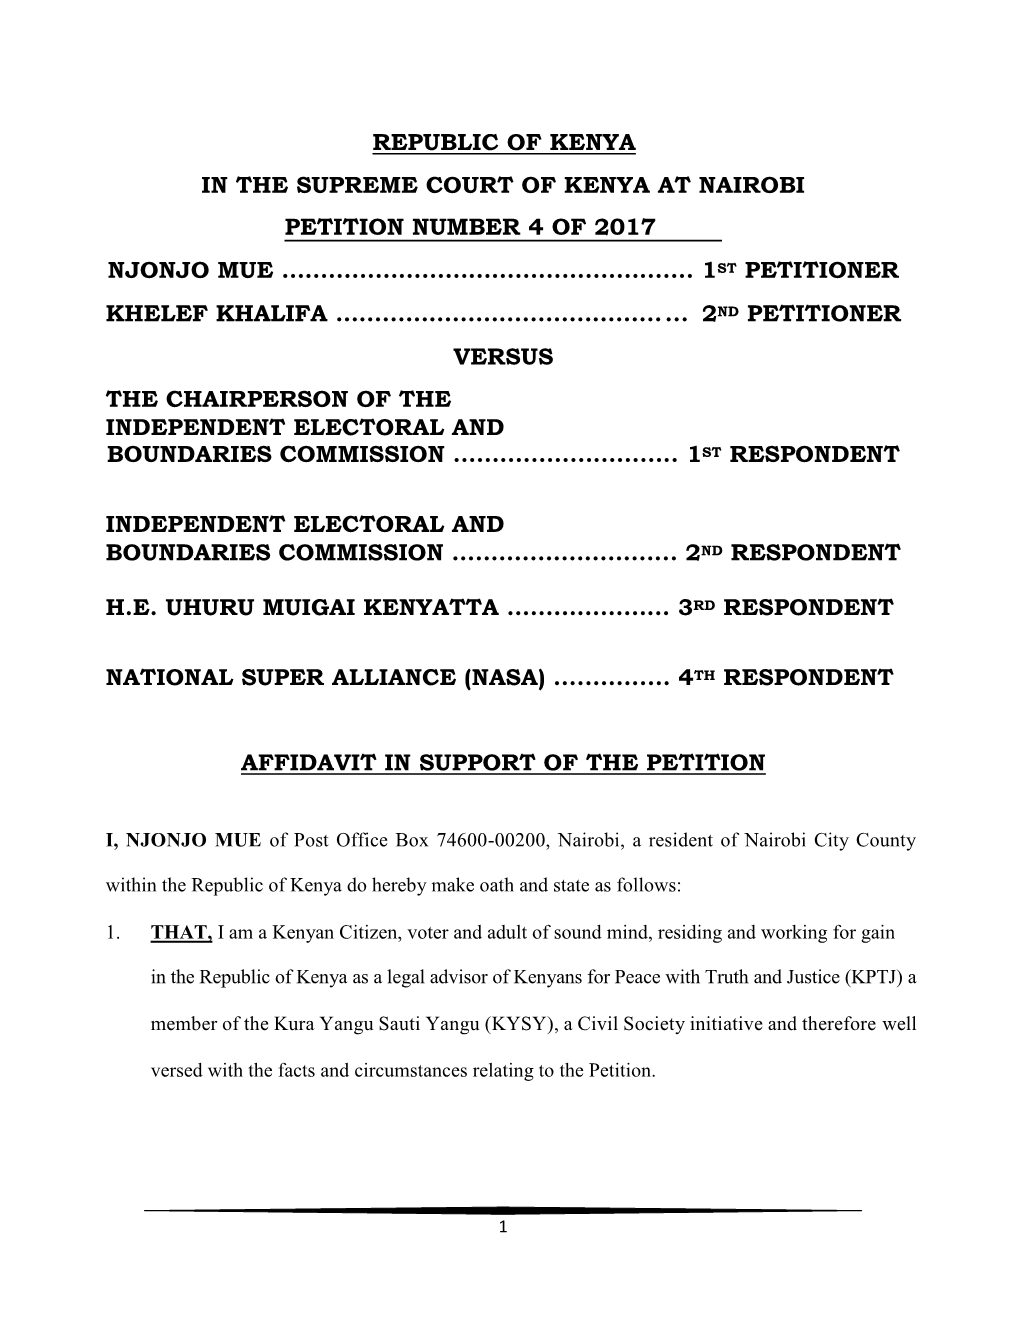 Republic of Kenya in the Supreme Court of Kenya at Nairobi Petition Number 4 of 2017 Njonjo Mue ……………………… K